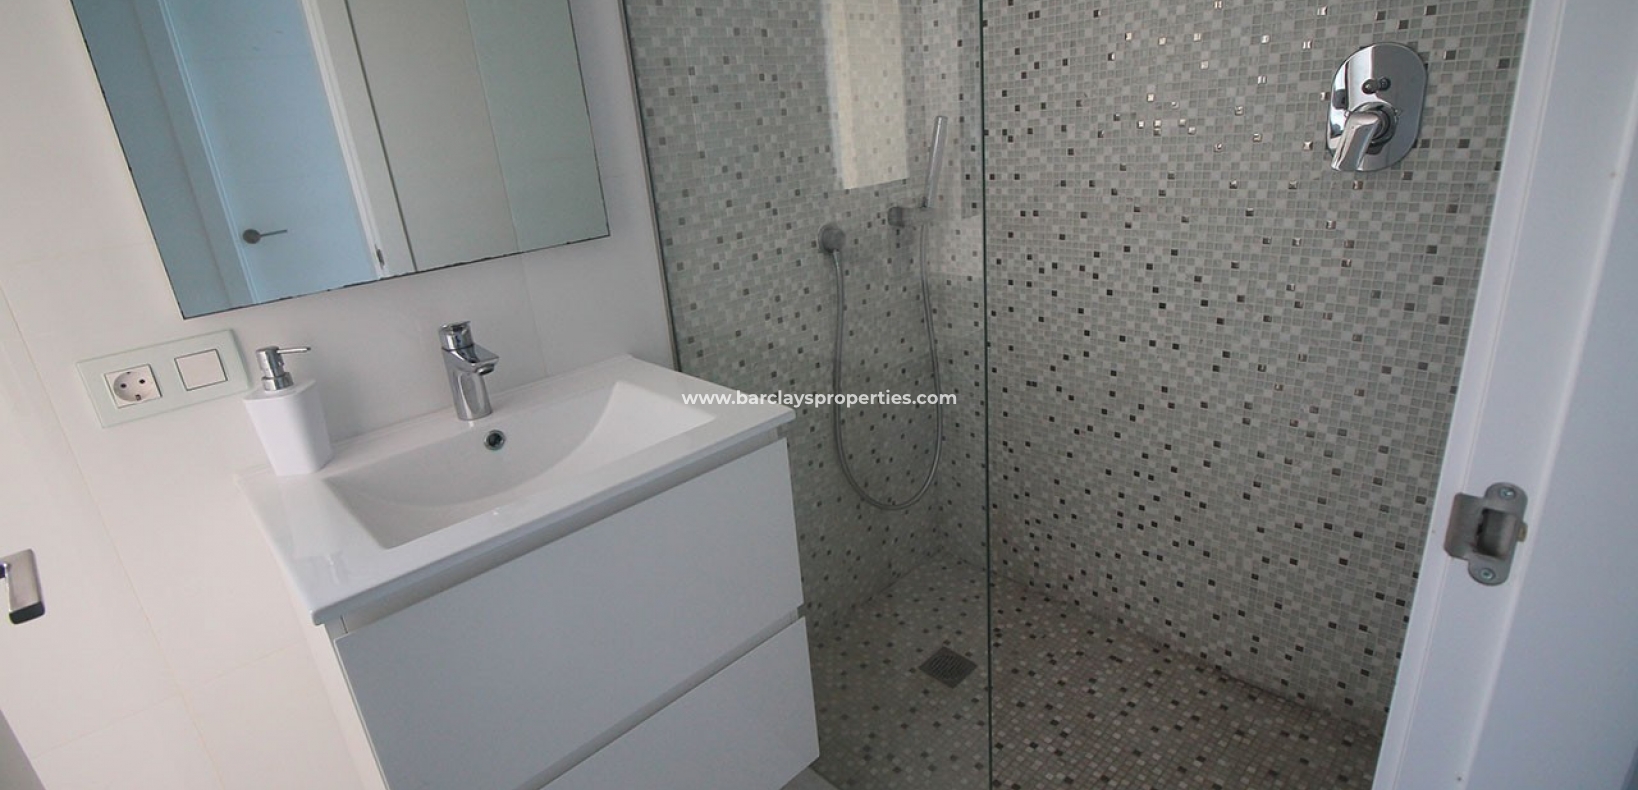 Bathroom - Modern villa for sale in urbanisation La Marina